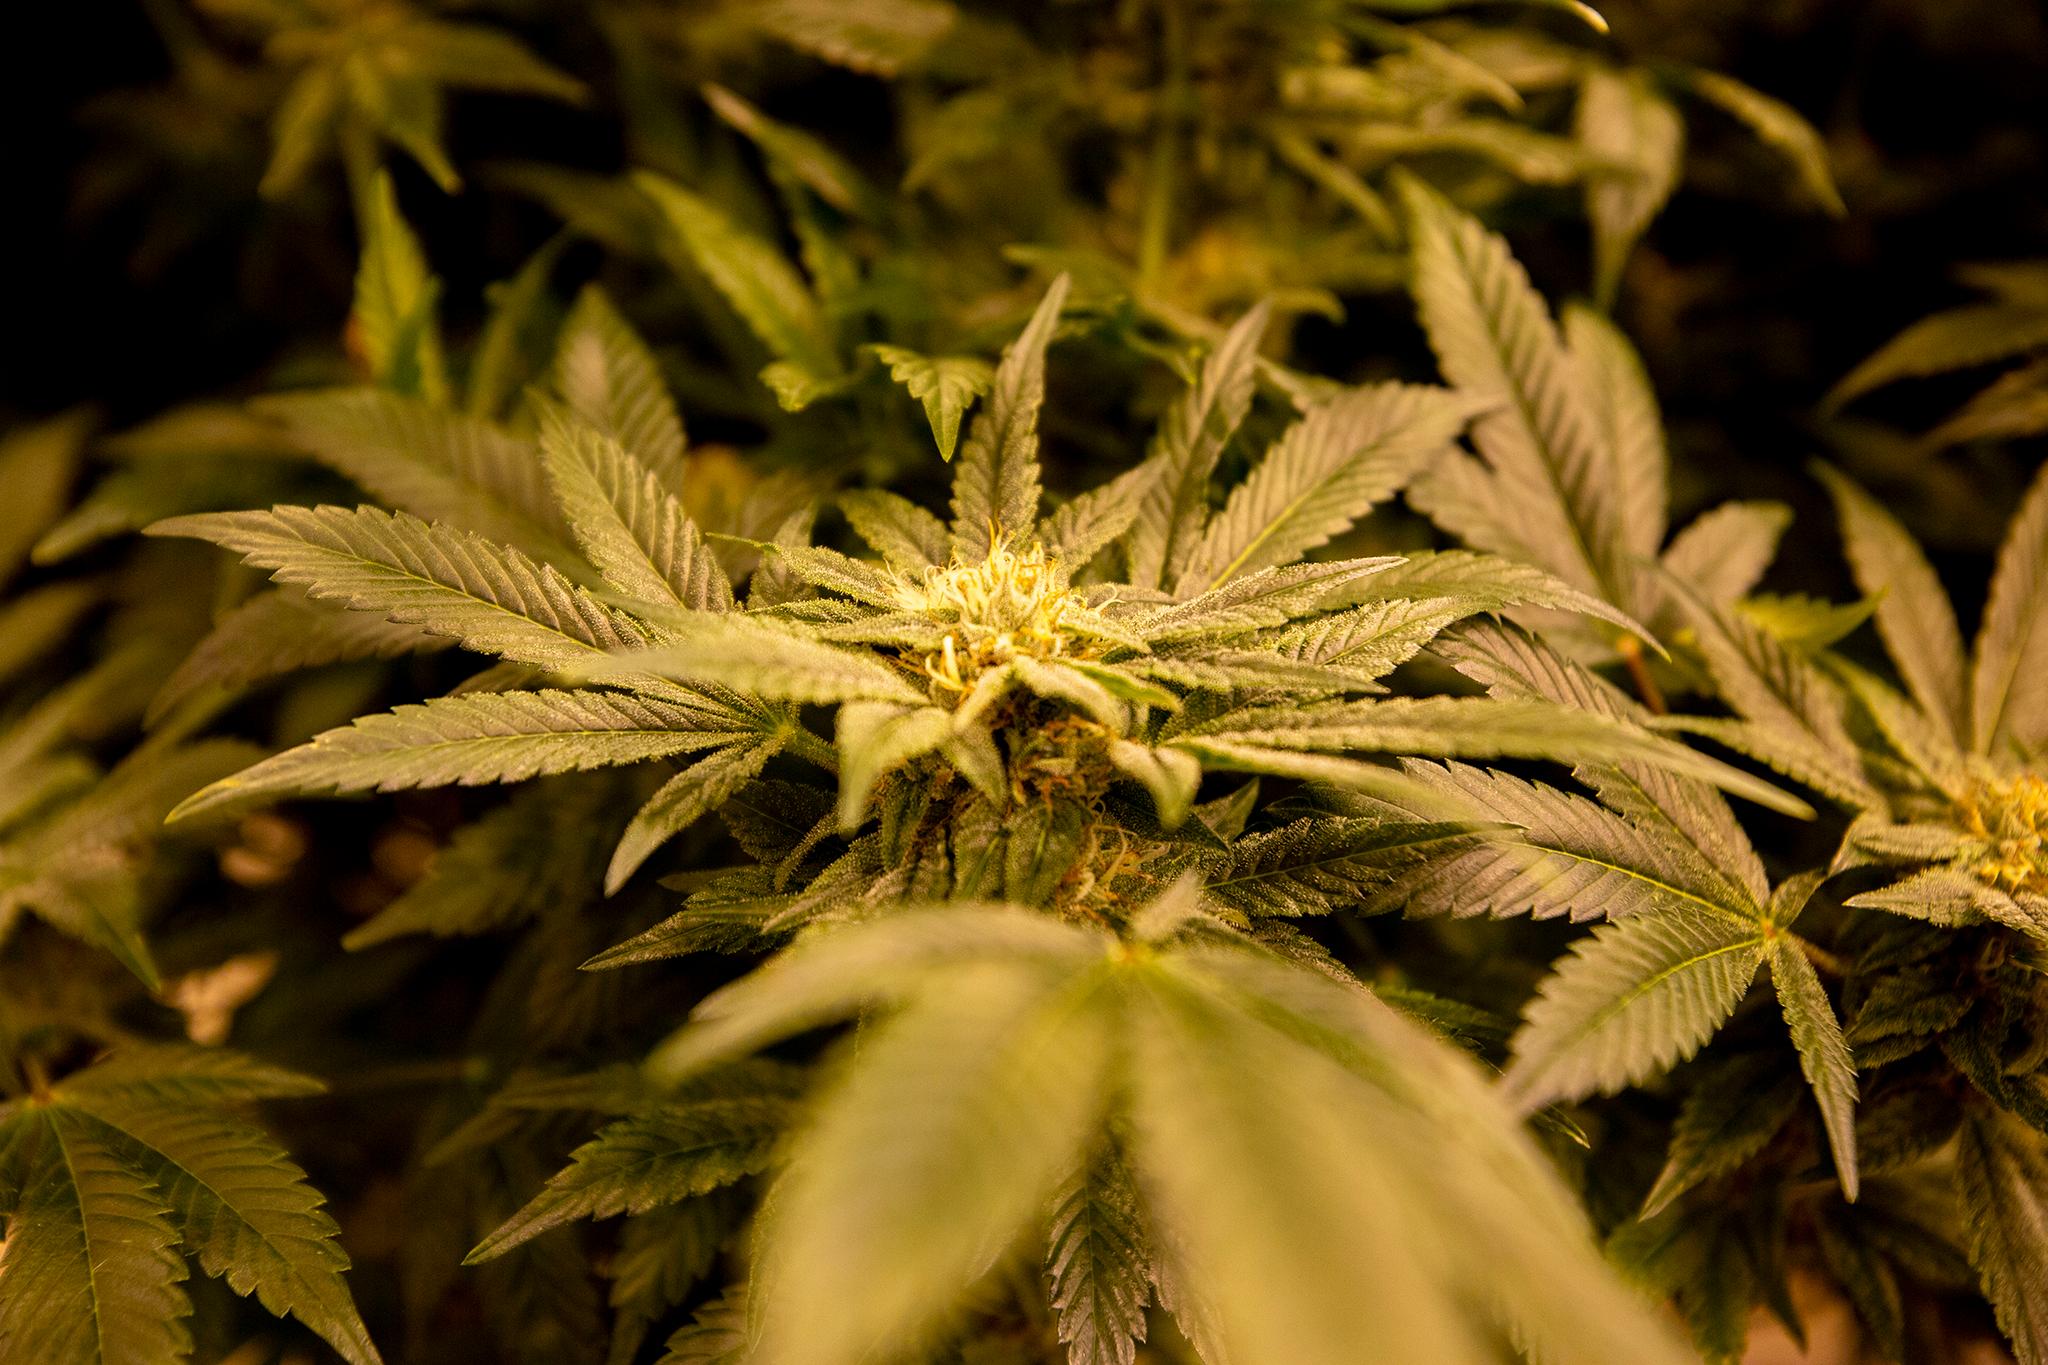 Marijuana grows in The Clinic's warehouse in Denver's Overland neighborhood. March 19, 2021.